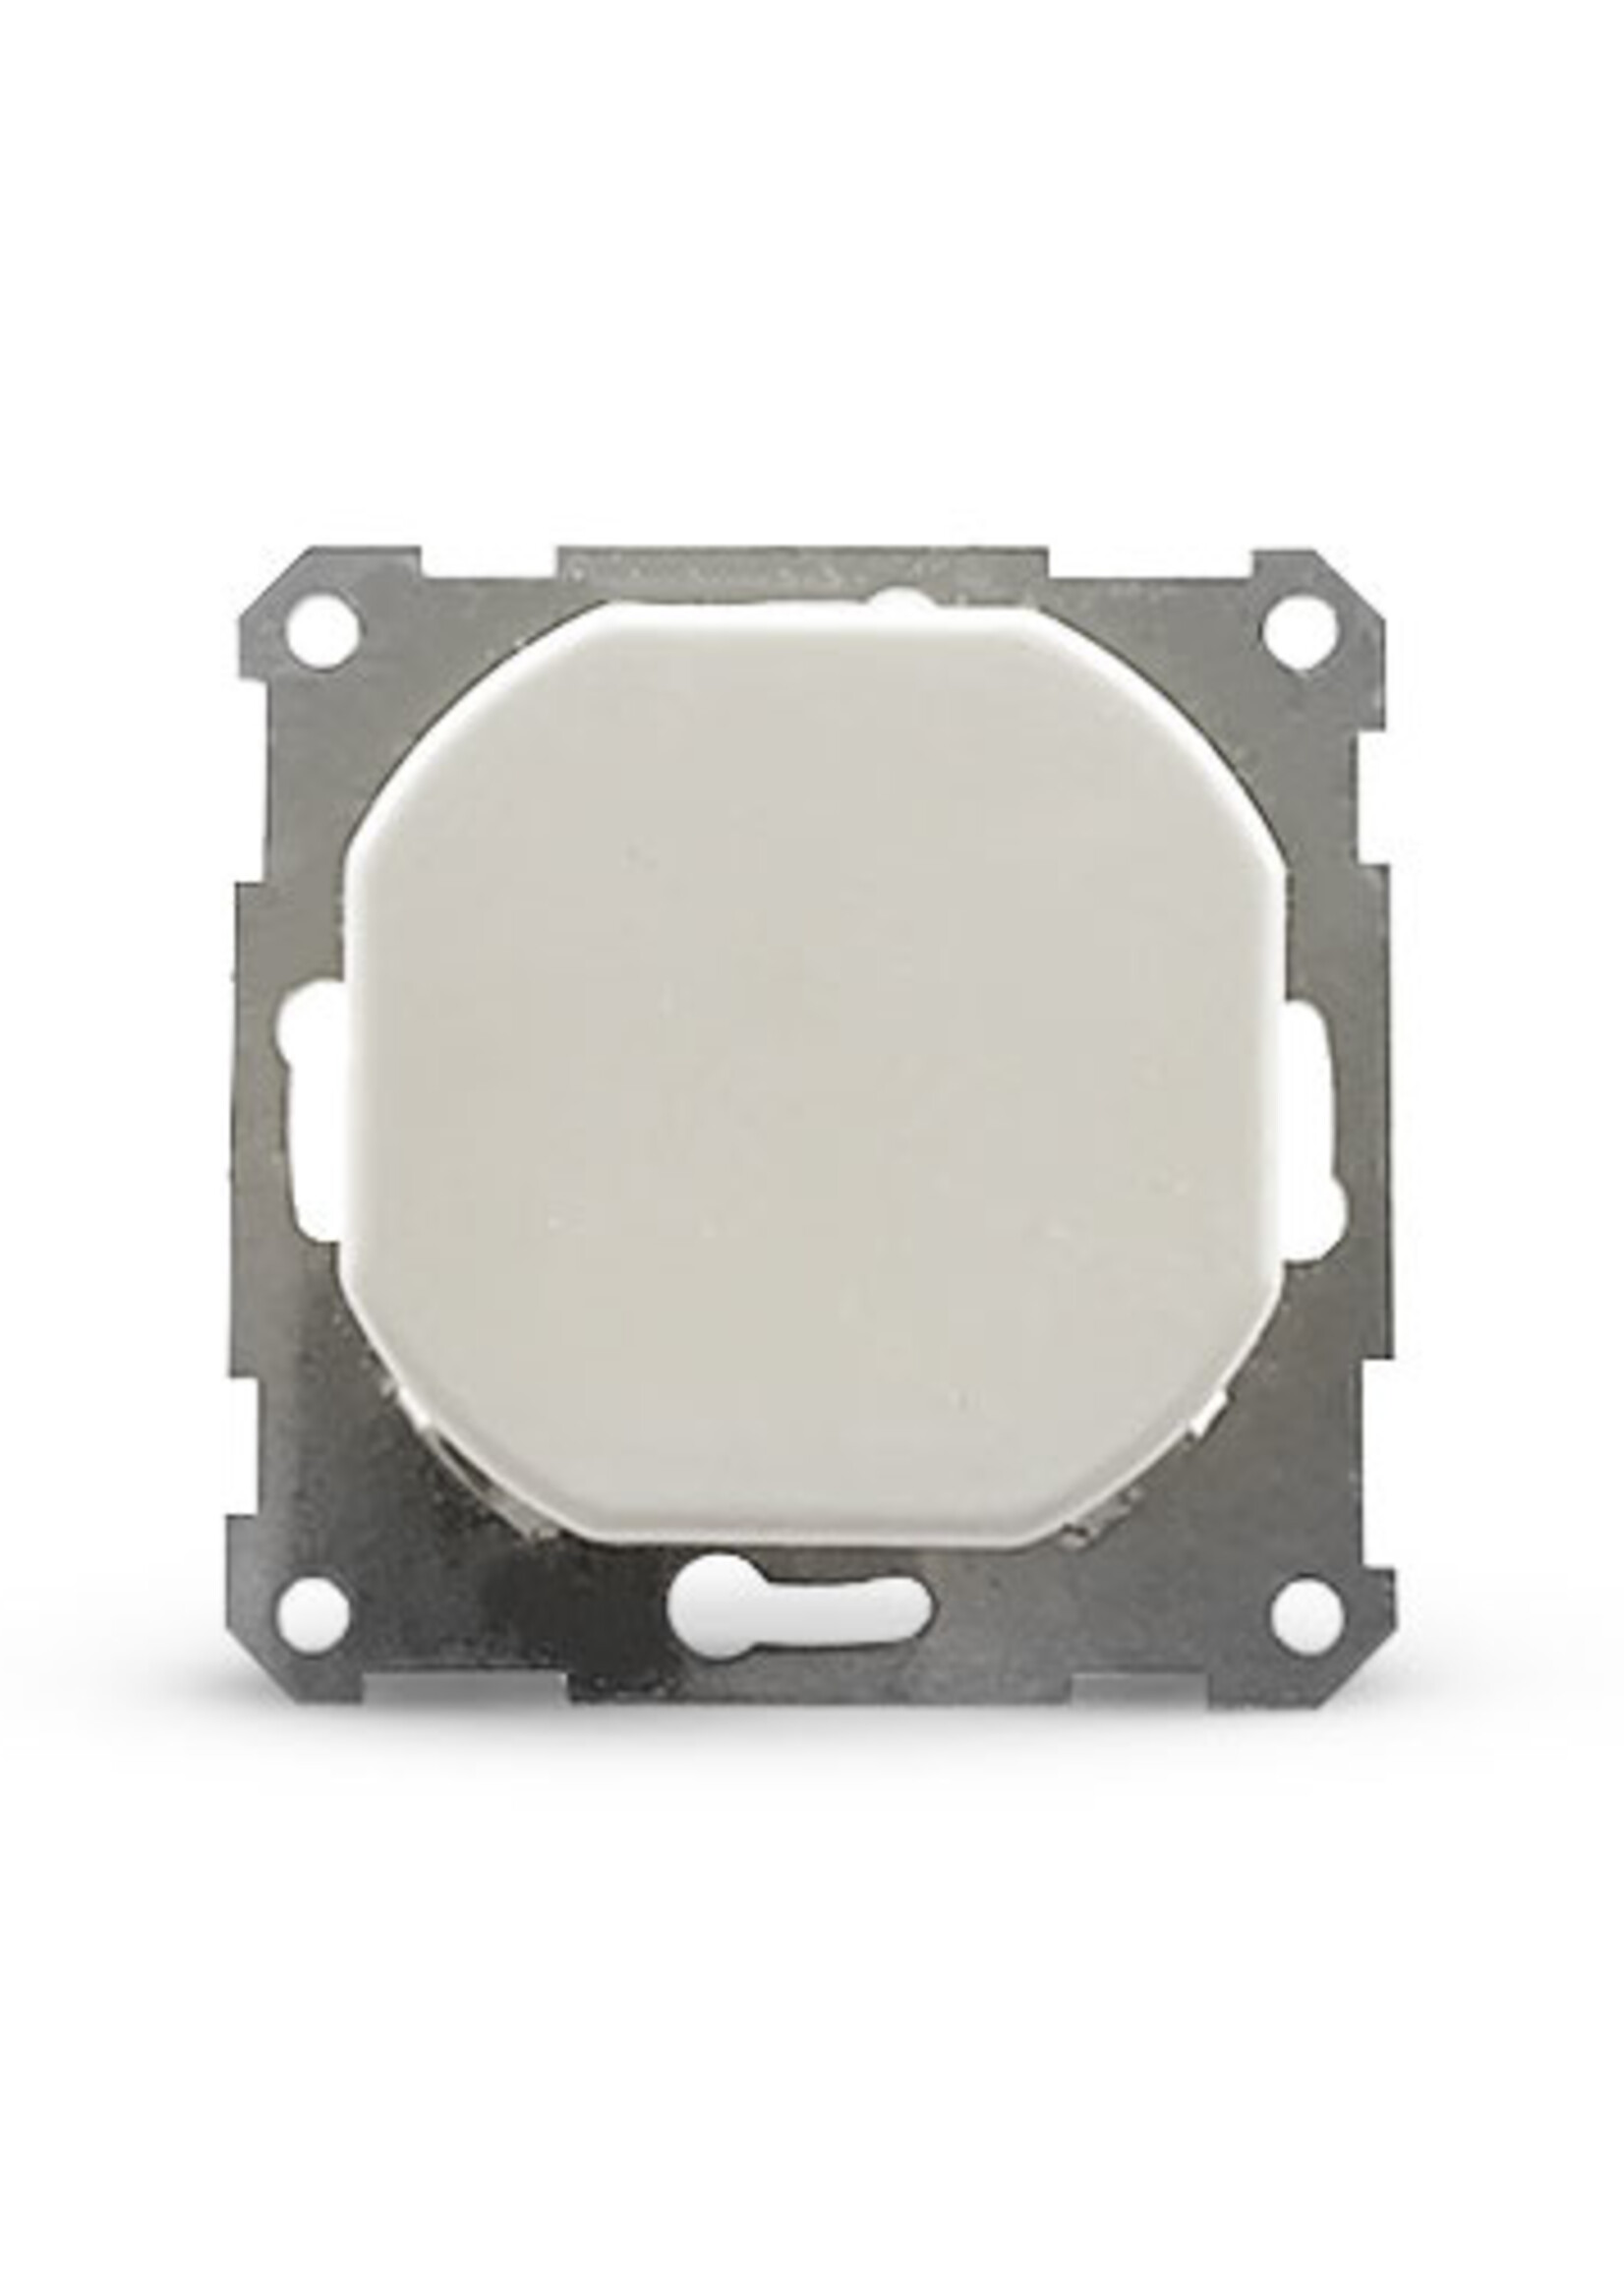 LEDWINKEL-Online LED Dimmer 1-10V with cover frame